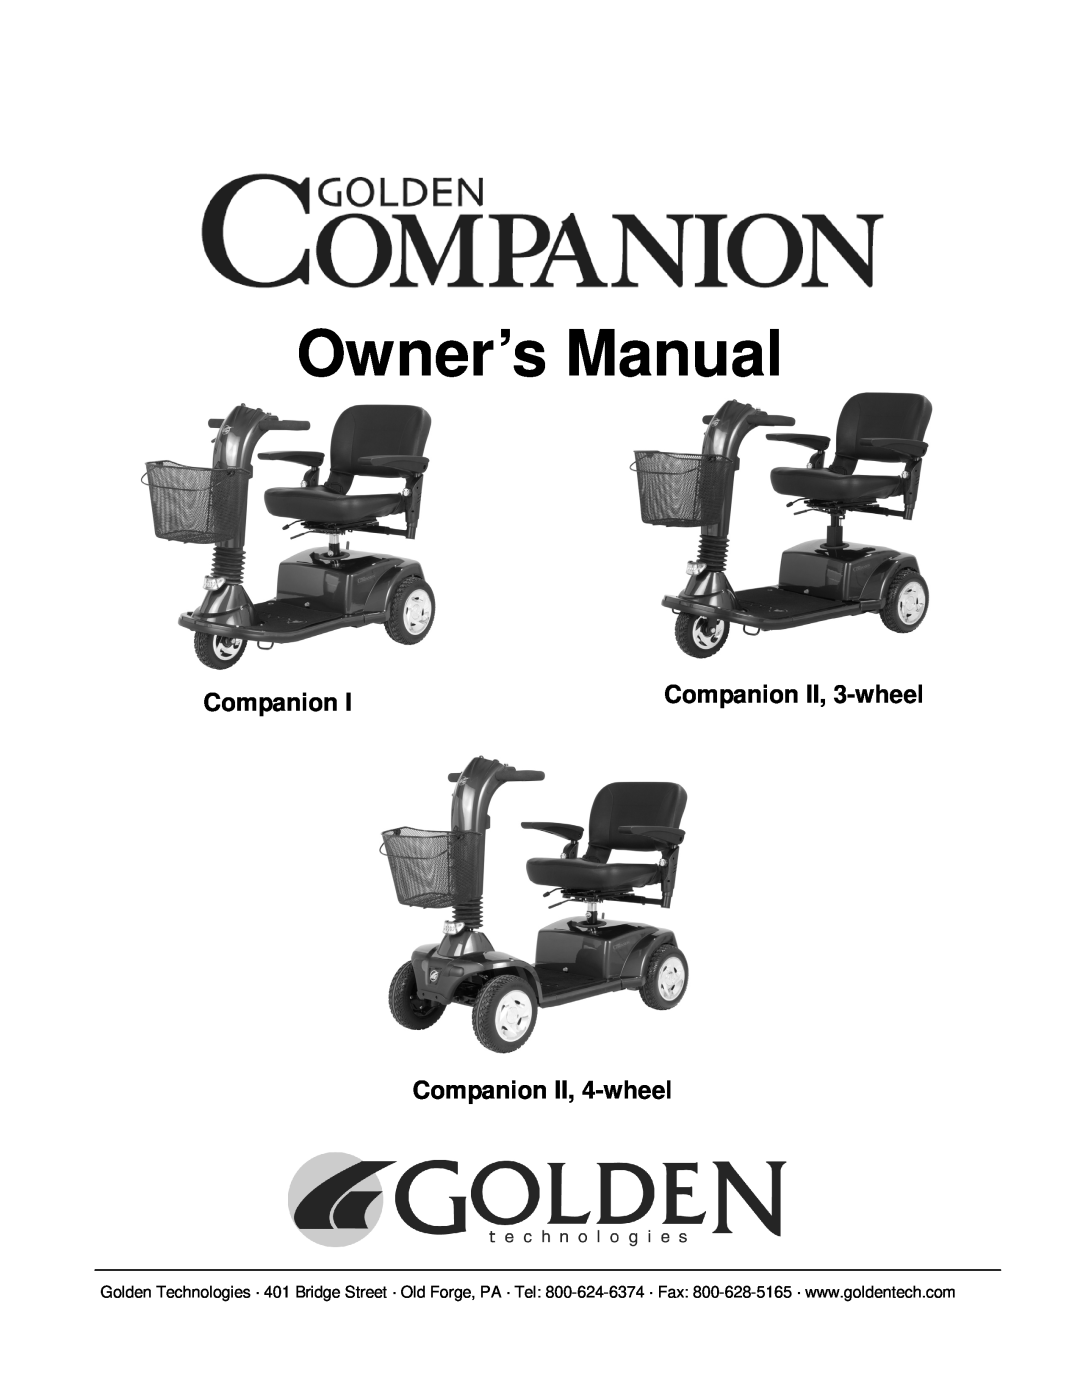 Golden Technologies GC340, GC240, GC440 owner manual Companion II, 4-wheel, Companion II, 3-wheel, Owner’s Manual 